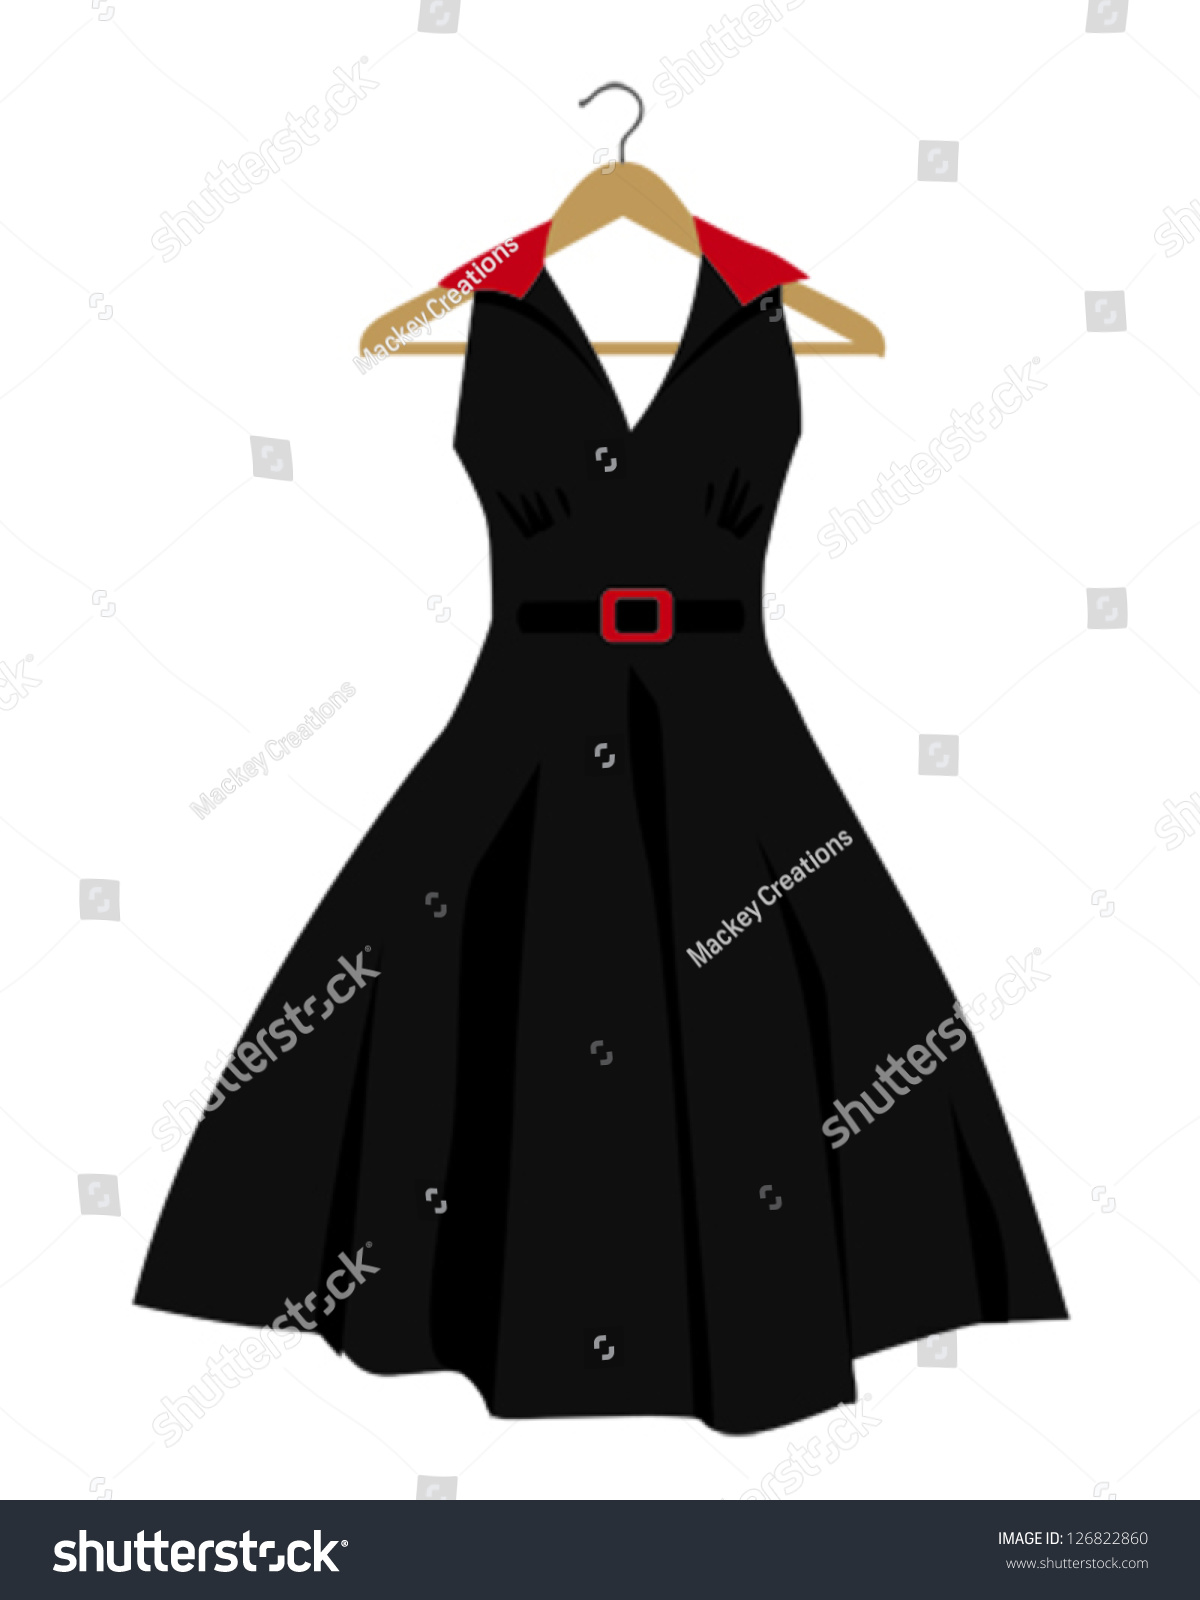 Vector Illustration Of A Black Dress - 126822860 : Shutterstock